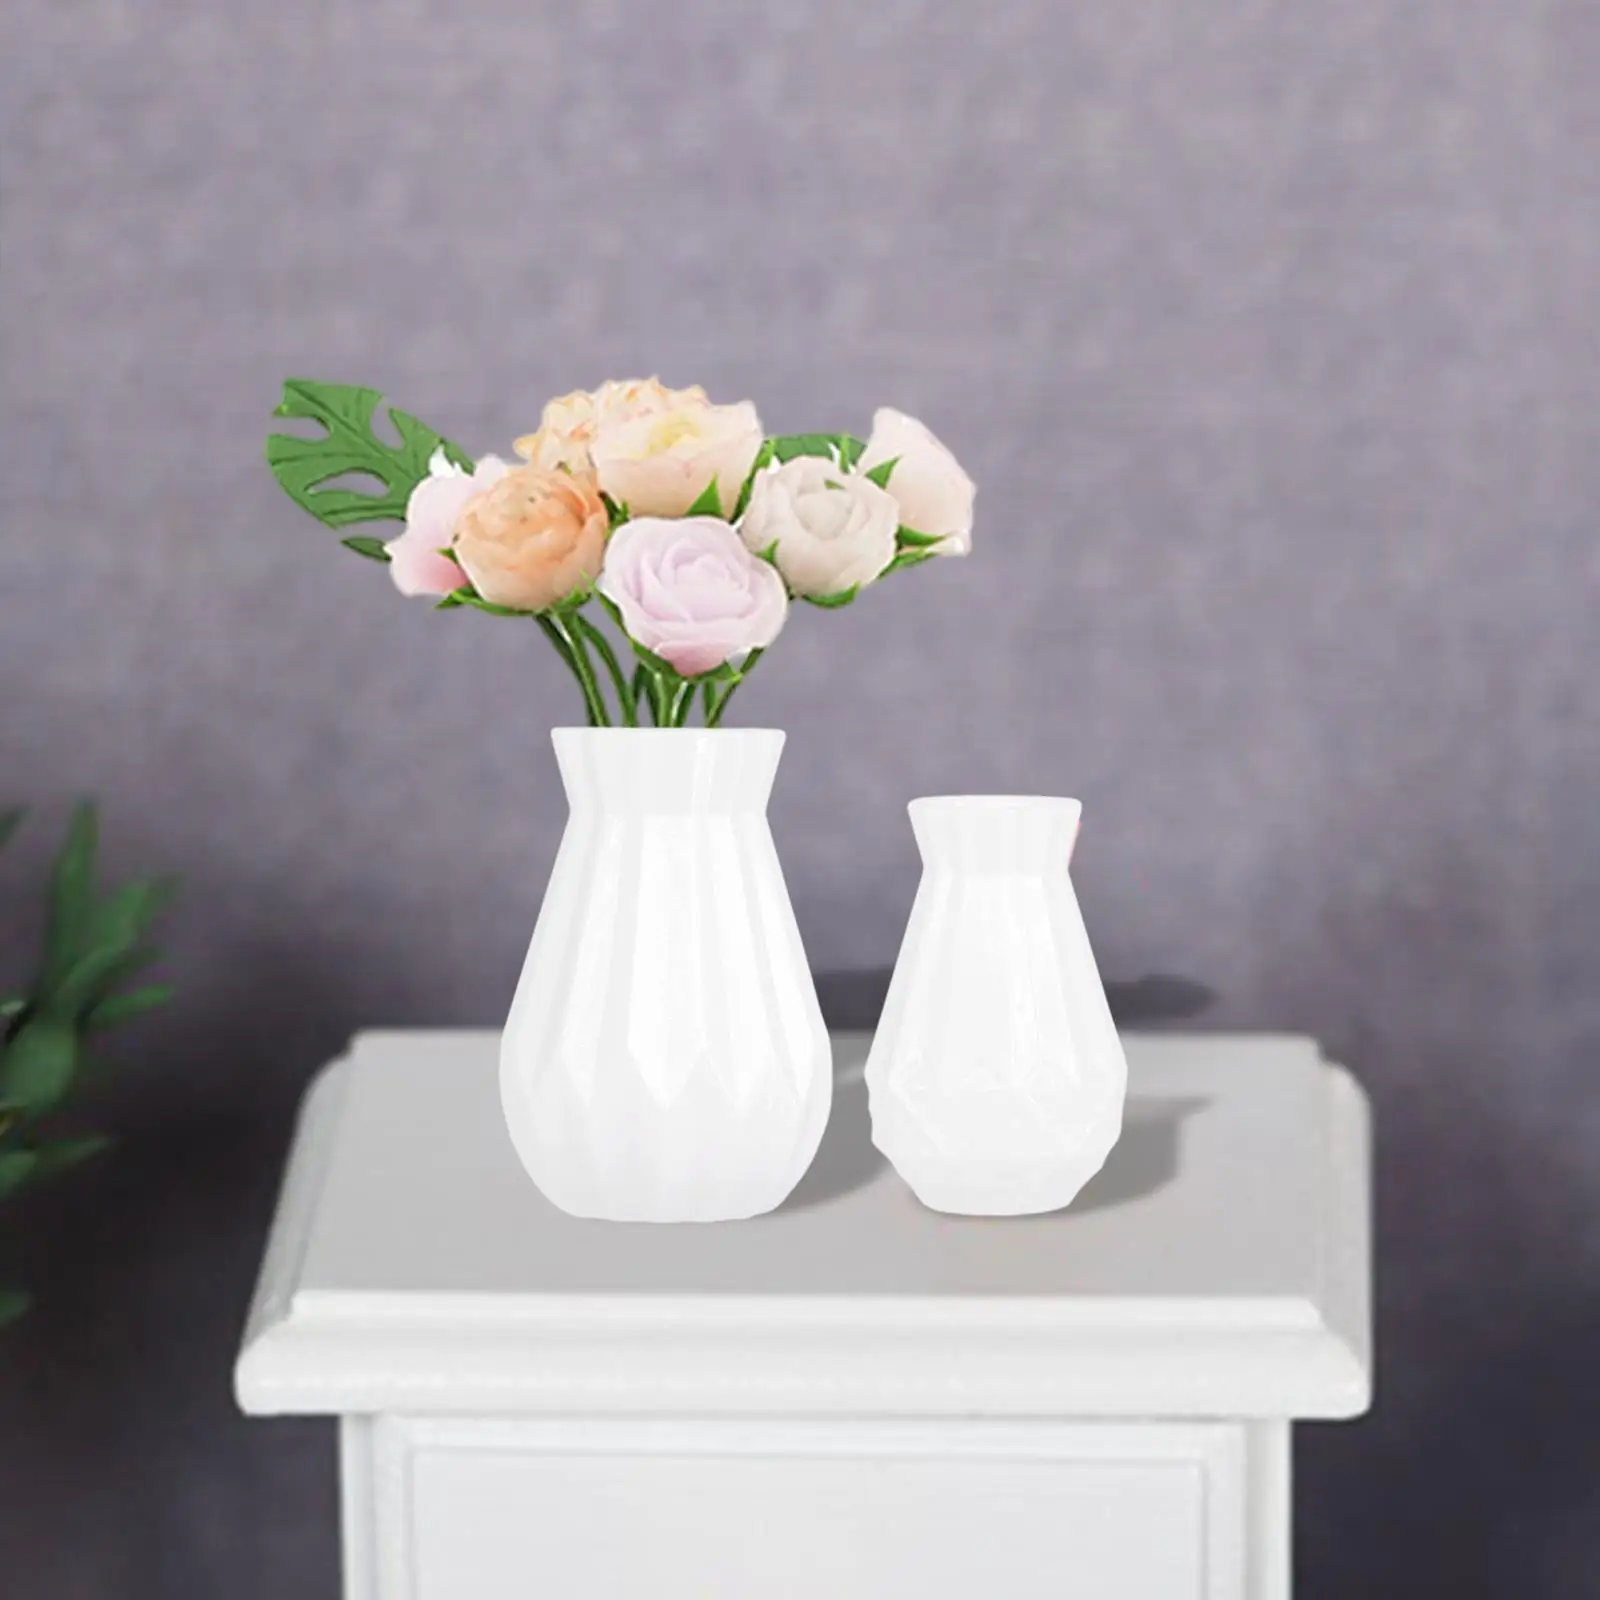 Dollhouse Vase Cute Floral Vase Model Decor Accessories for Home Desktop